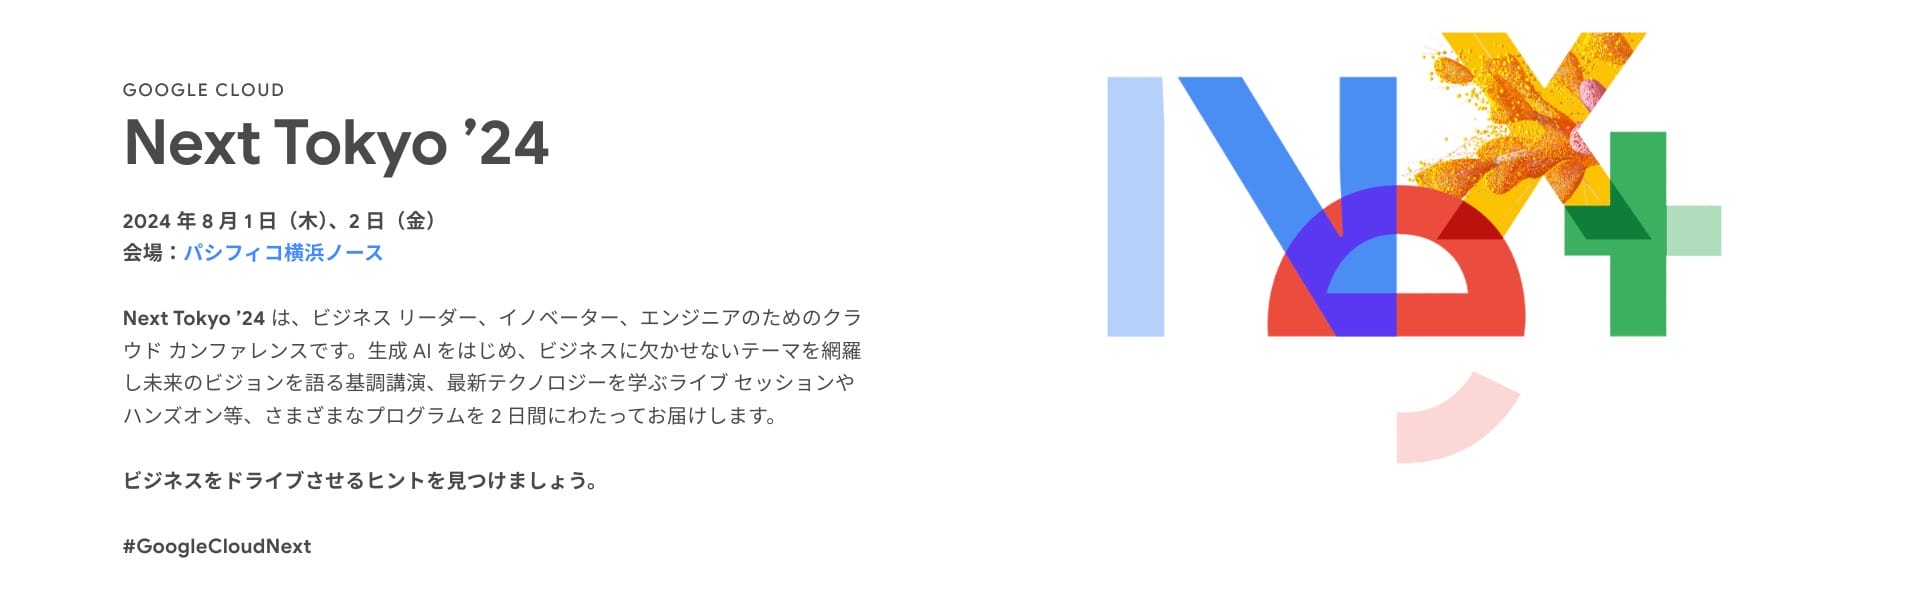 [Google Cloud] Google Cloud Next Tokyo ’24